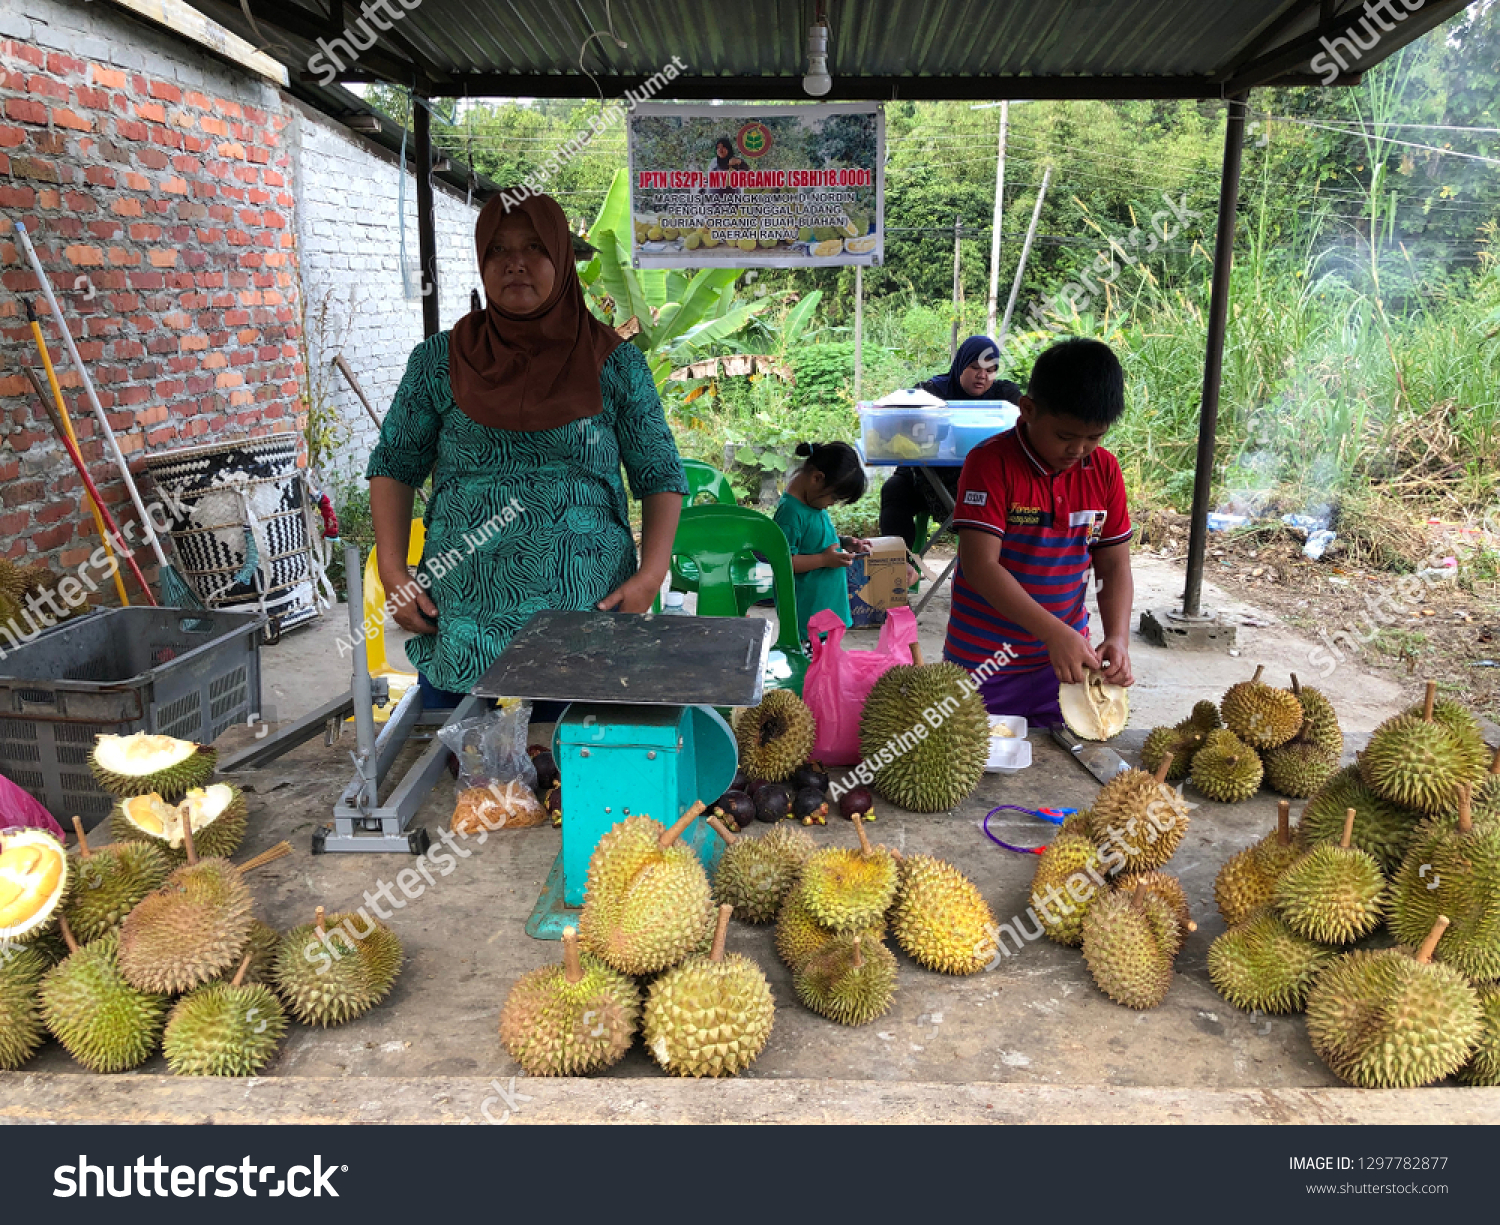 Durian tunggal daerah mana